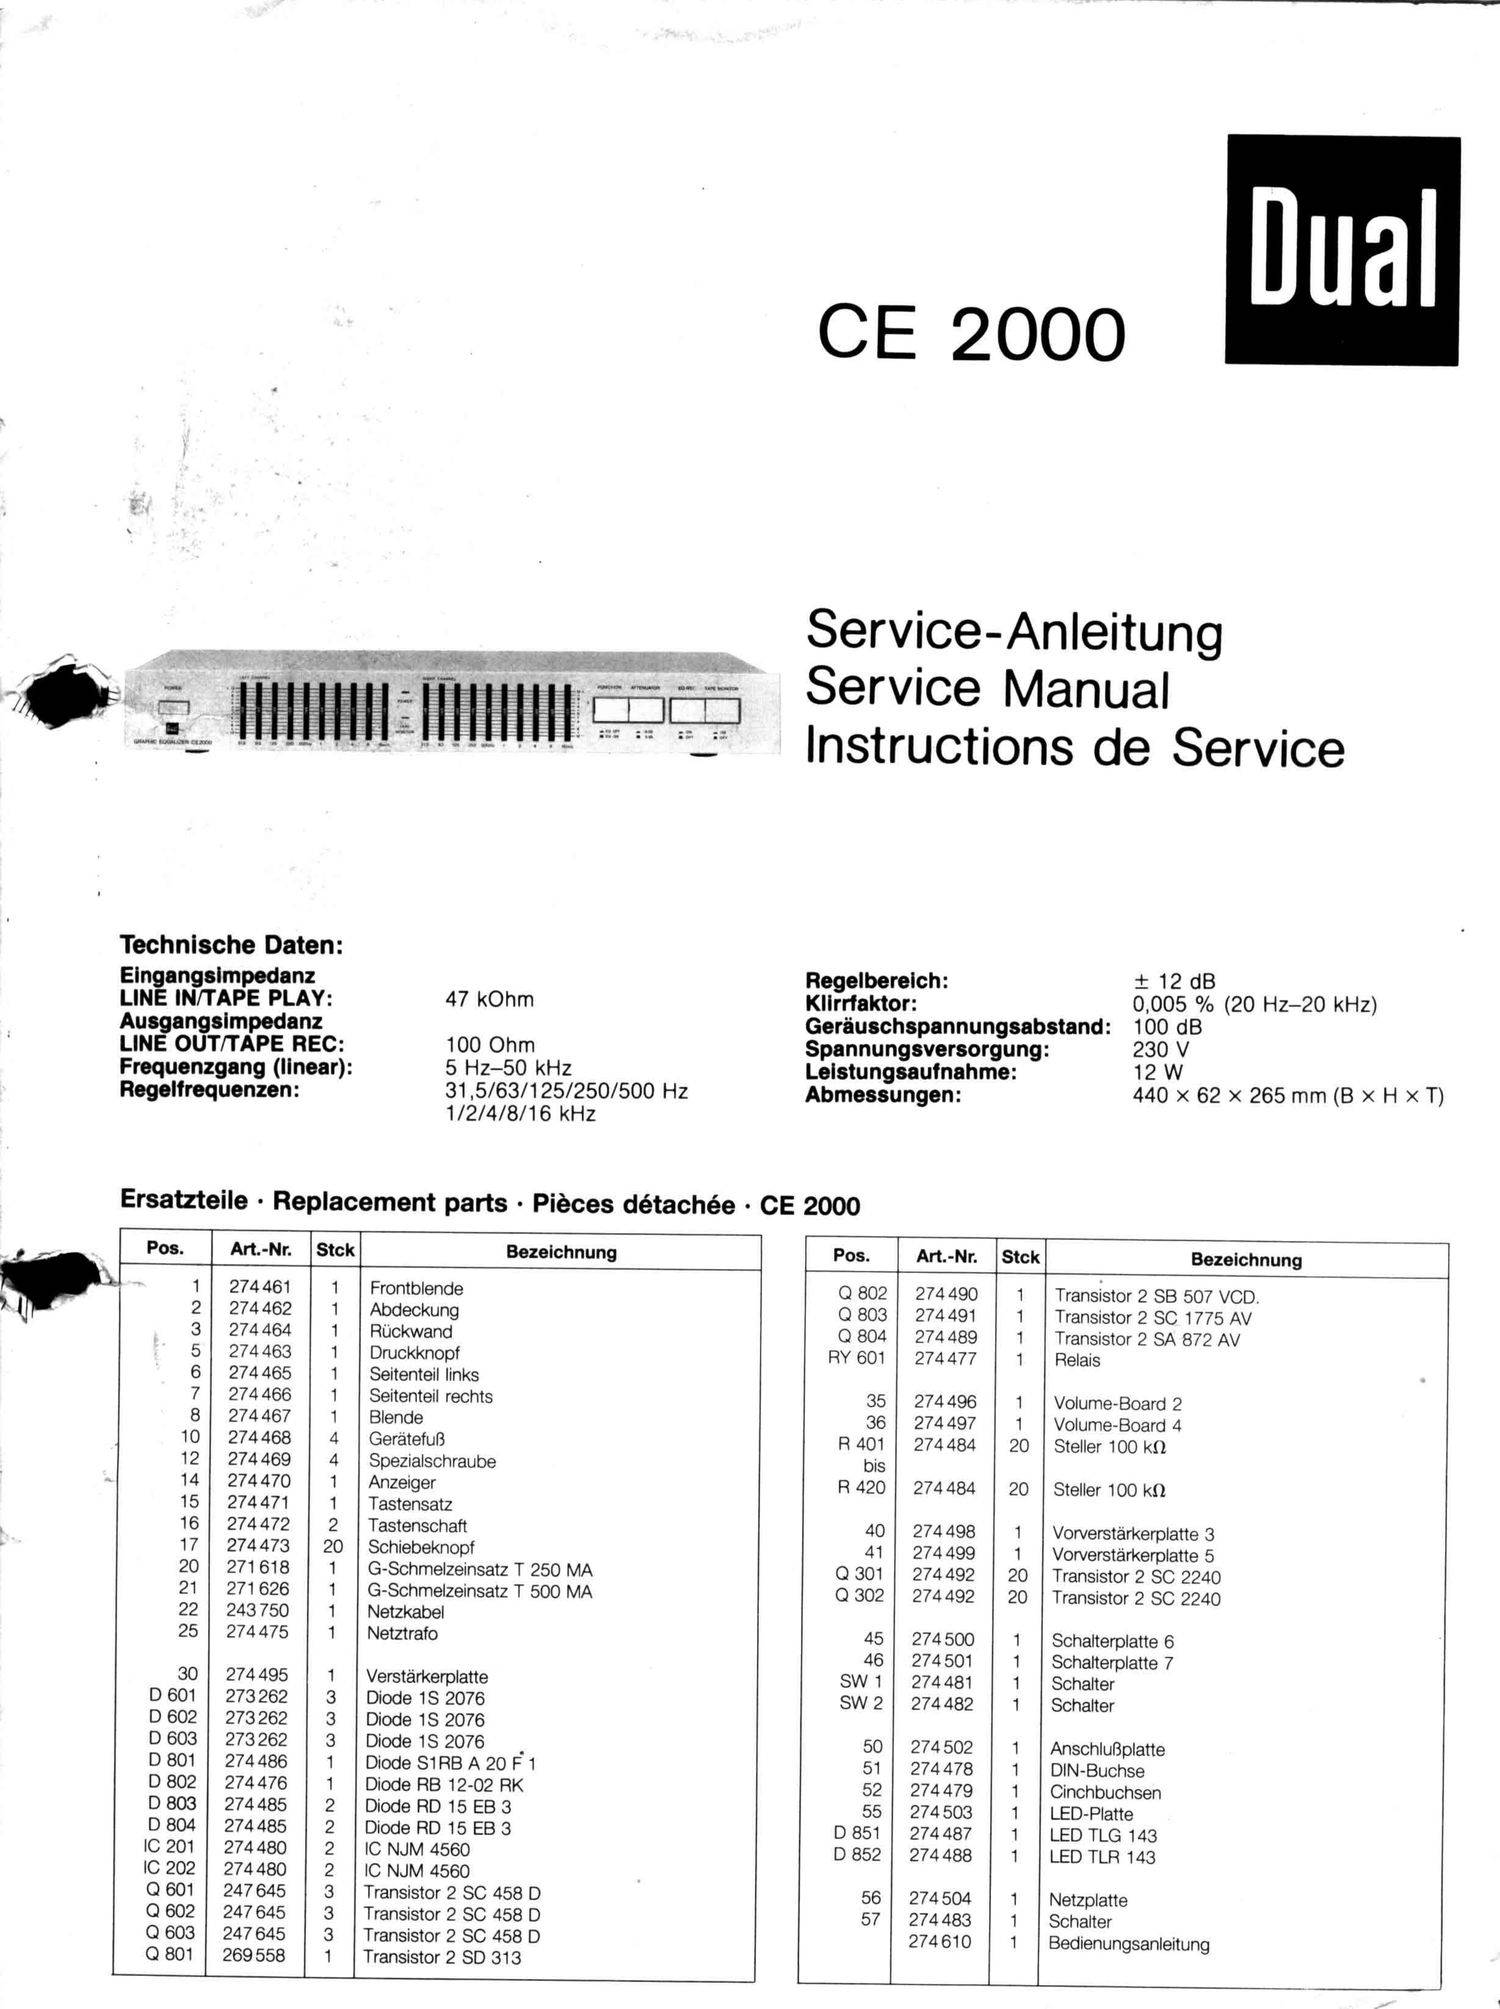 Dual CE 2000